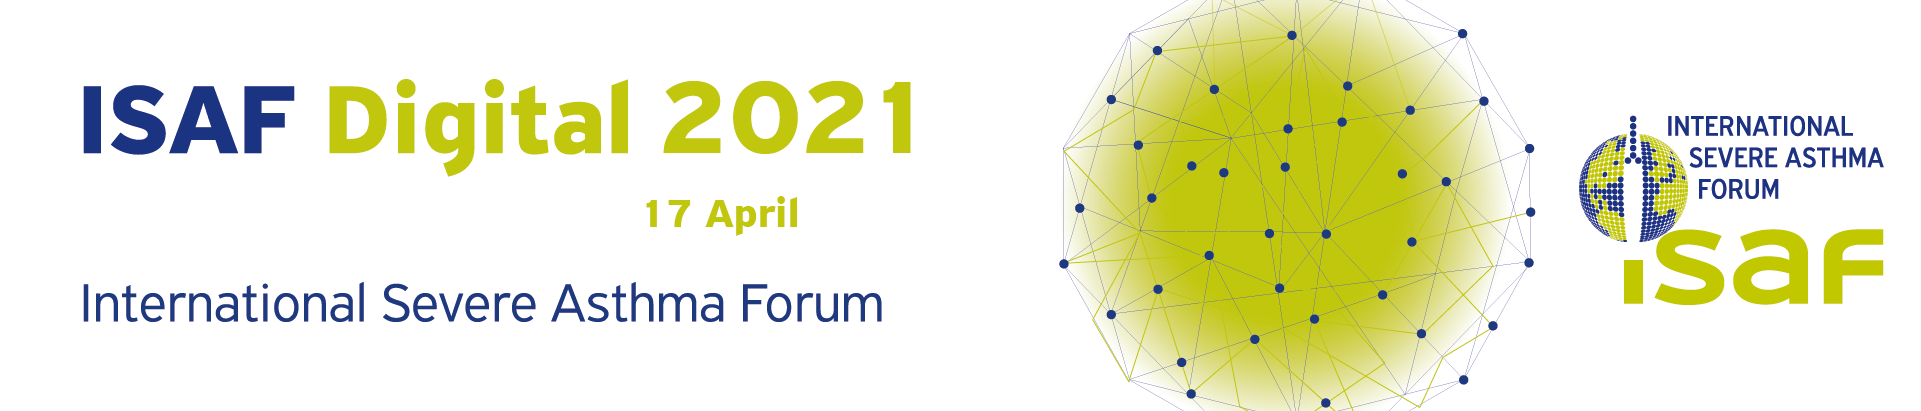 International Severe Asthma Forum - ISAF 2021